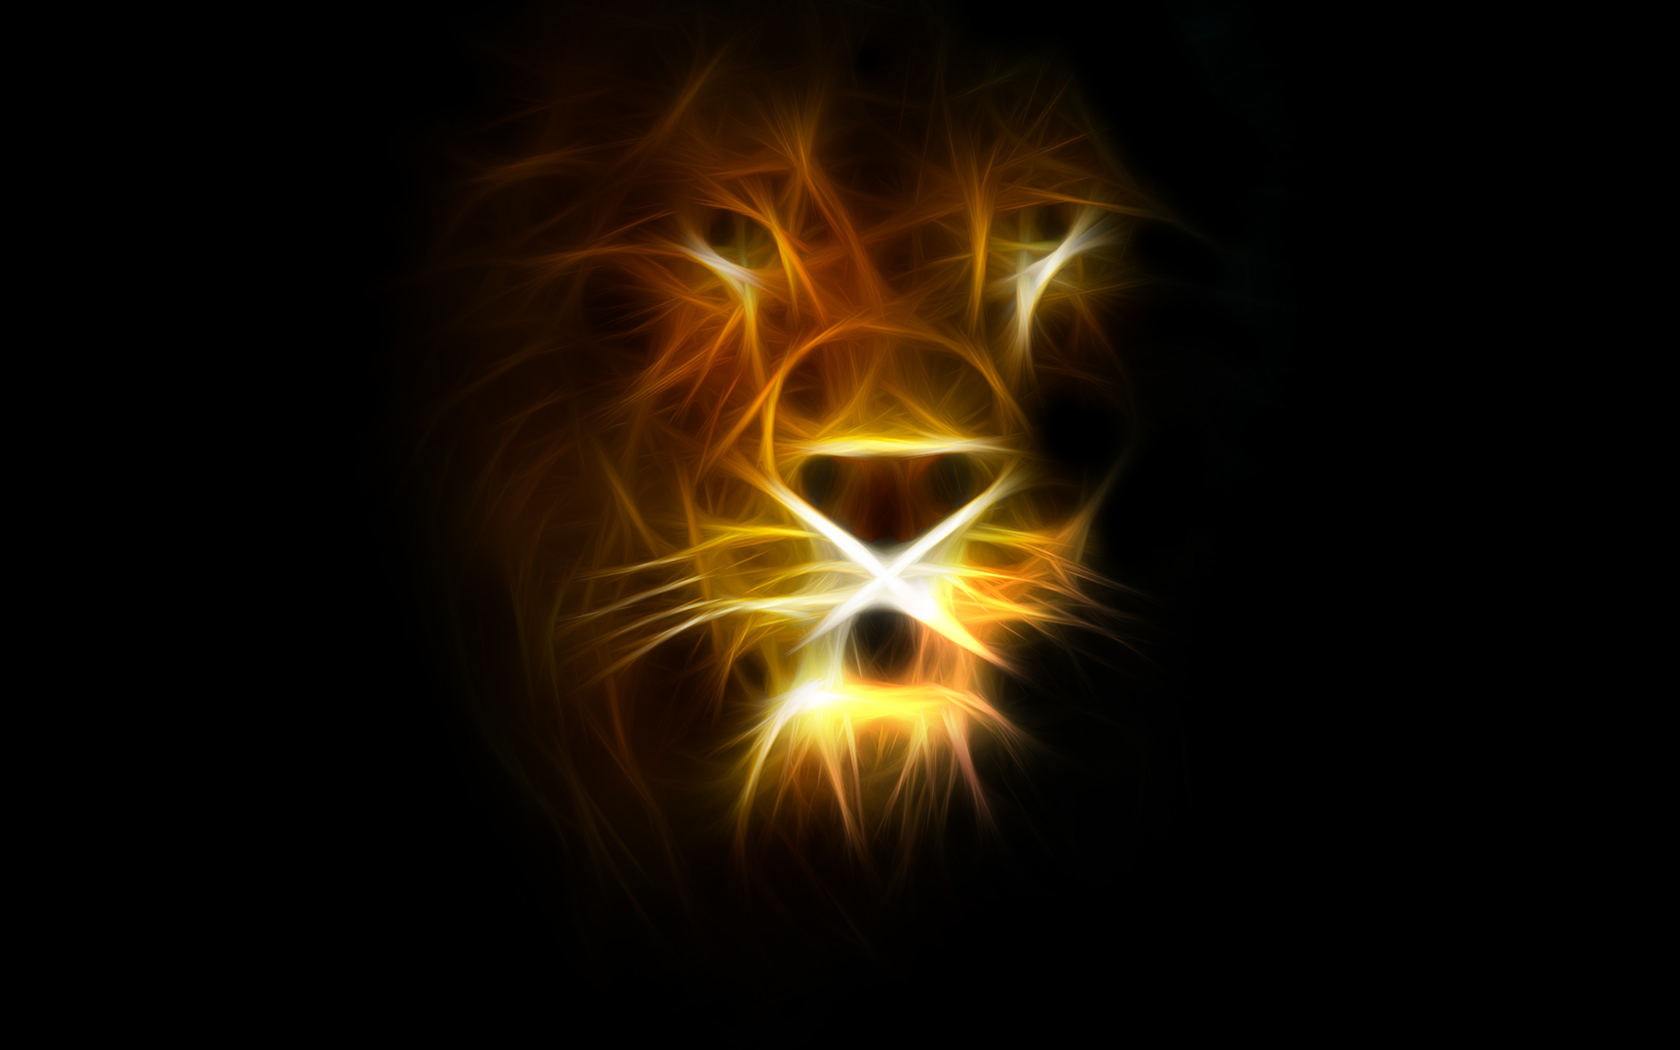 Free download Download wallpaper lion desktop wallpapers lion [1680x1050] your Desktop, Mobile & Tablet | Explore 52+ Lion Desktop Wallpaper | Lion Wallpapers, Rasta Lion Wallpaper, Mac Lion Wallpaper